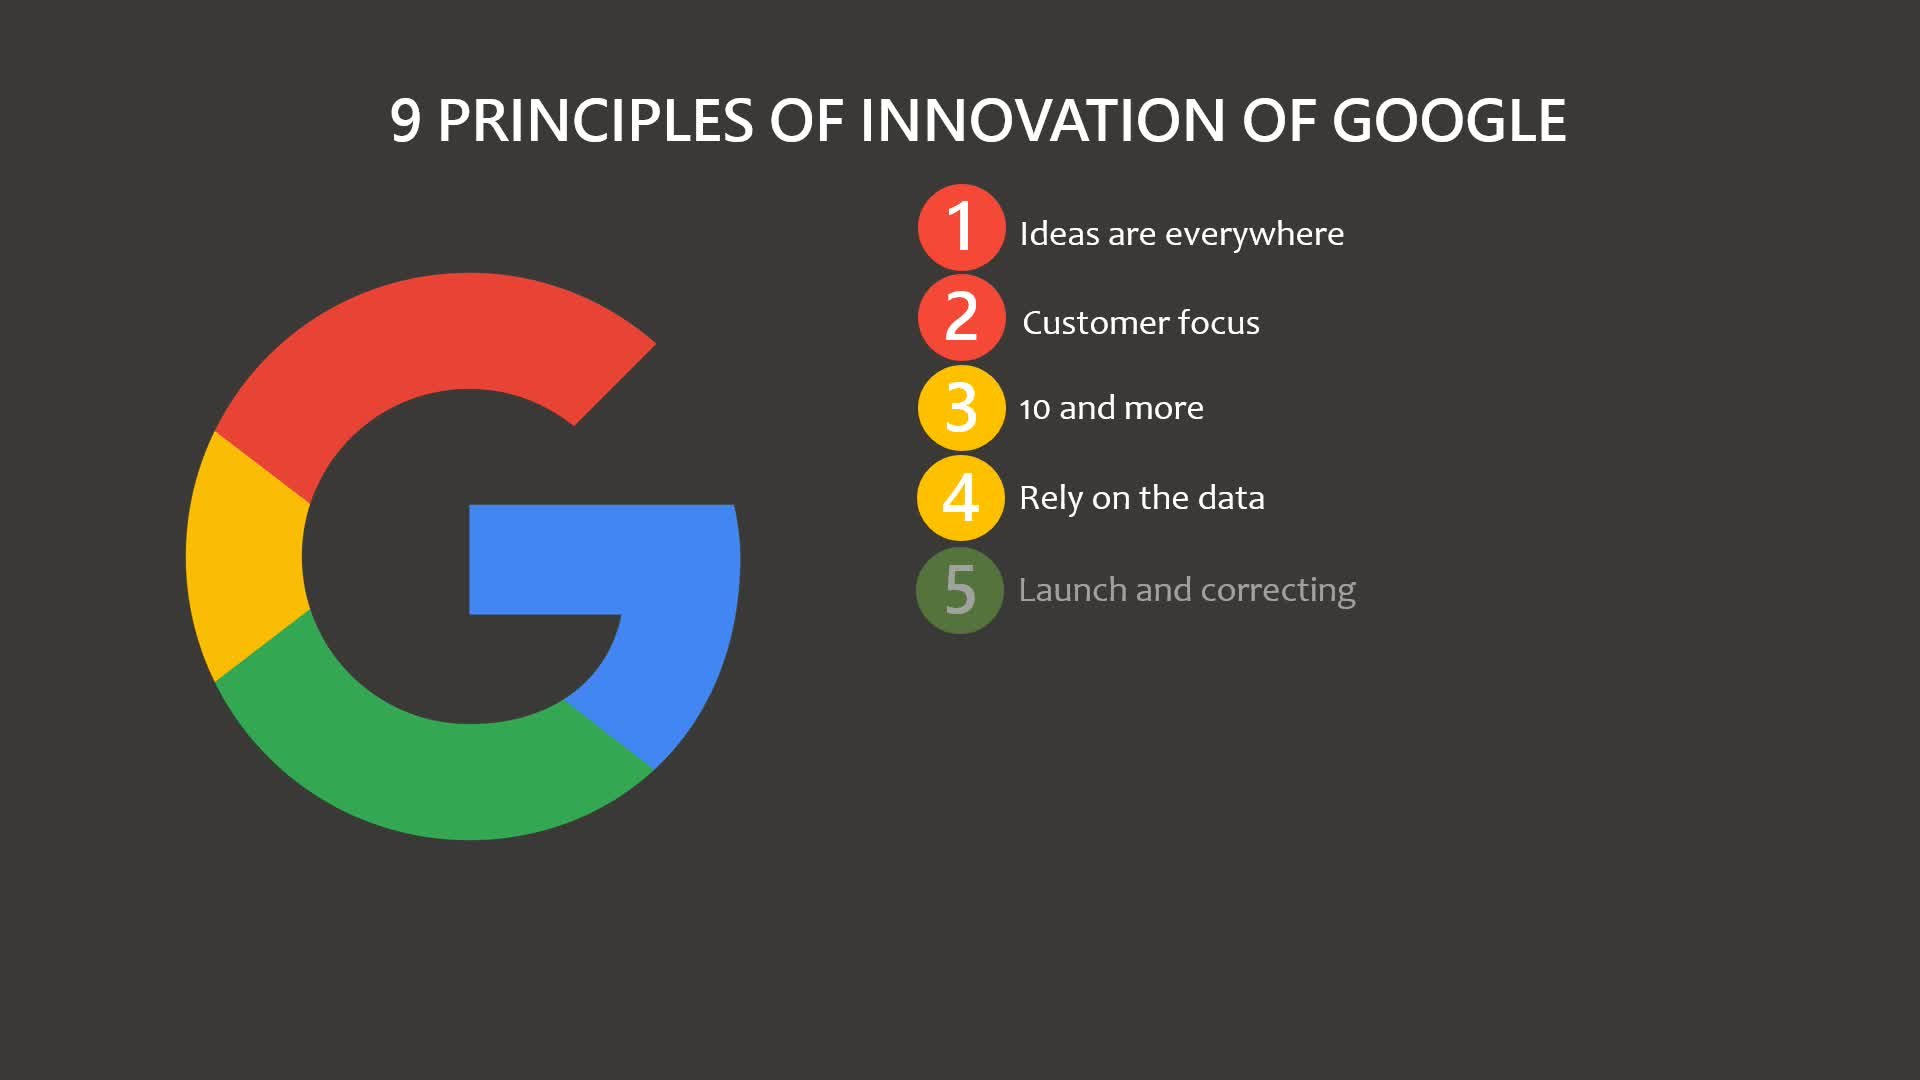 Google’s Principles of Innovation